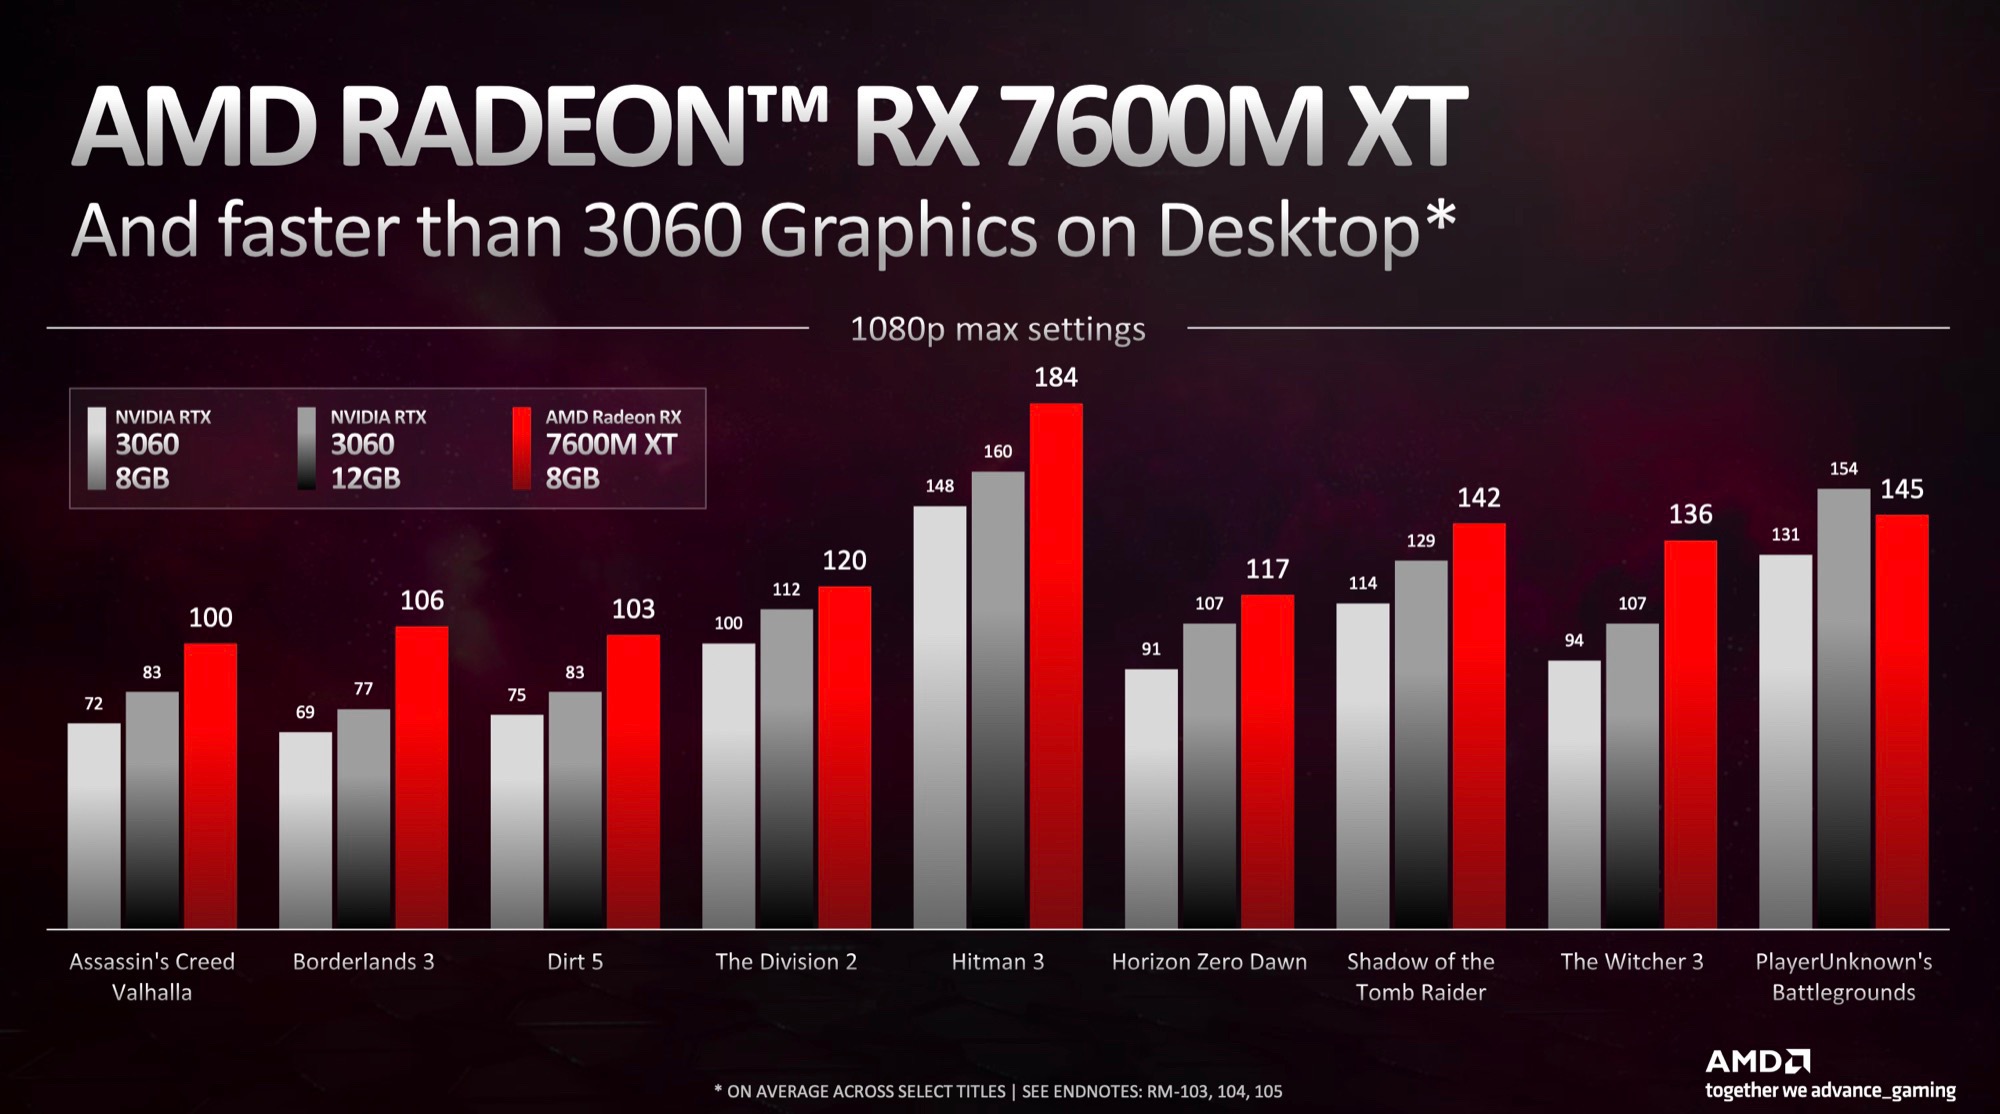 Radeon RX 7600M